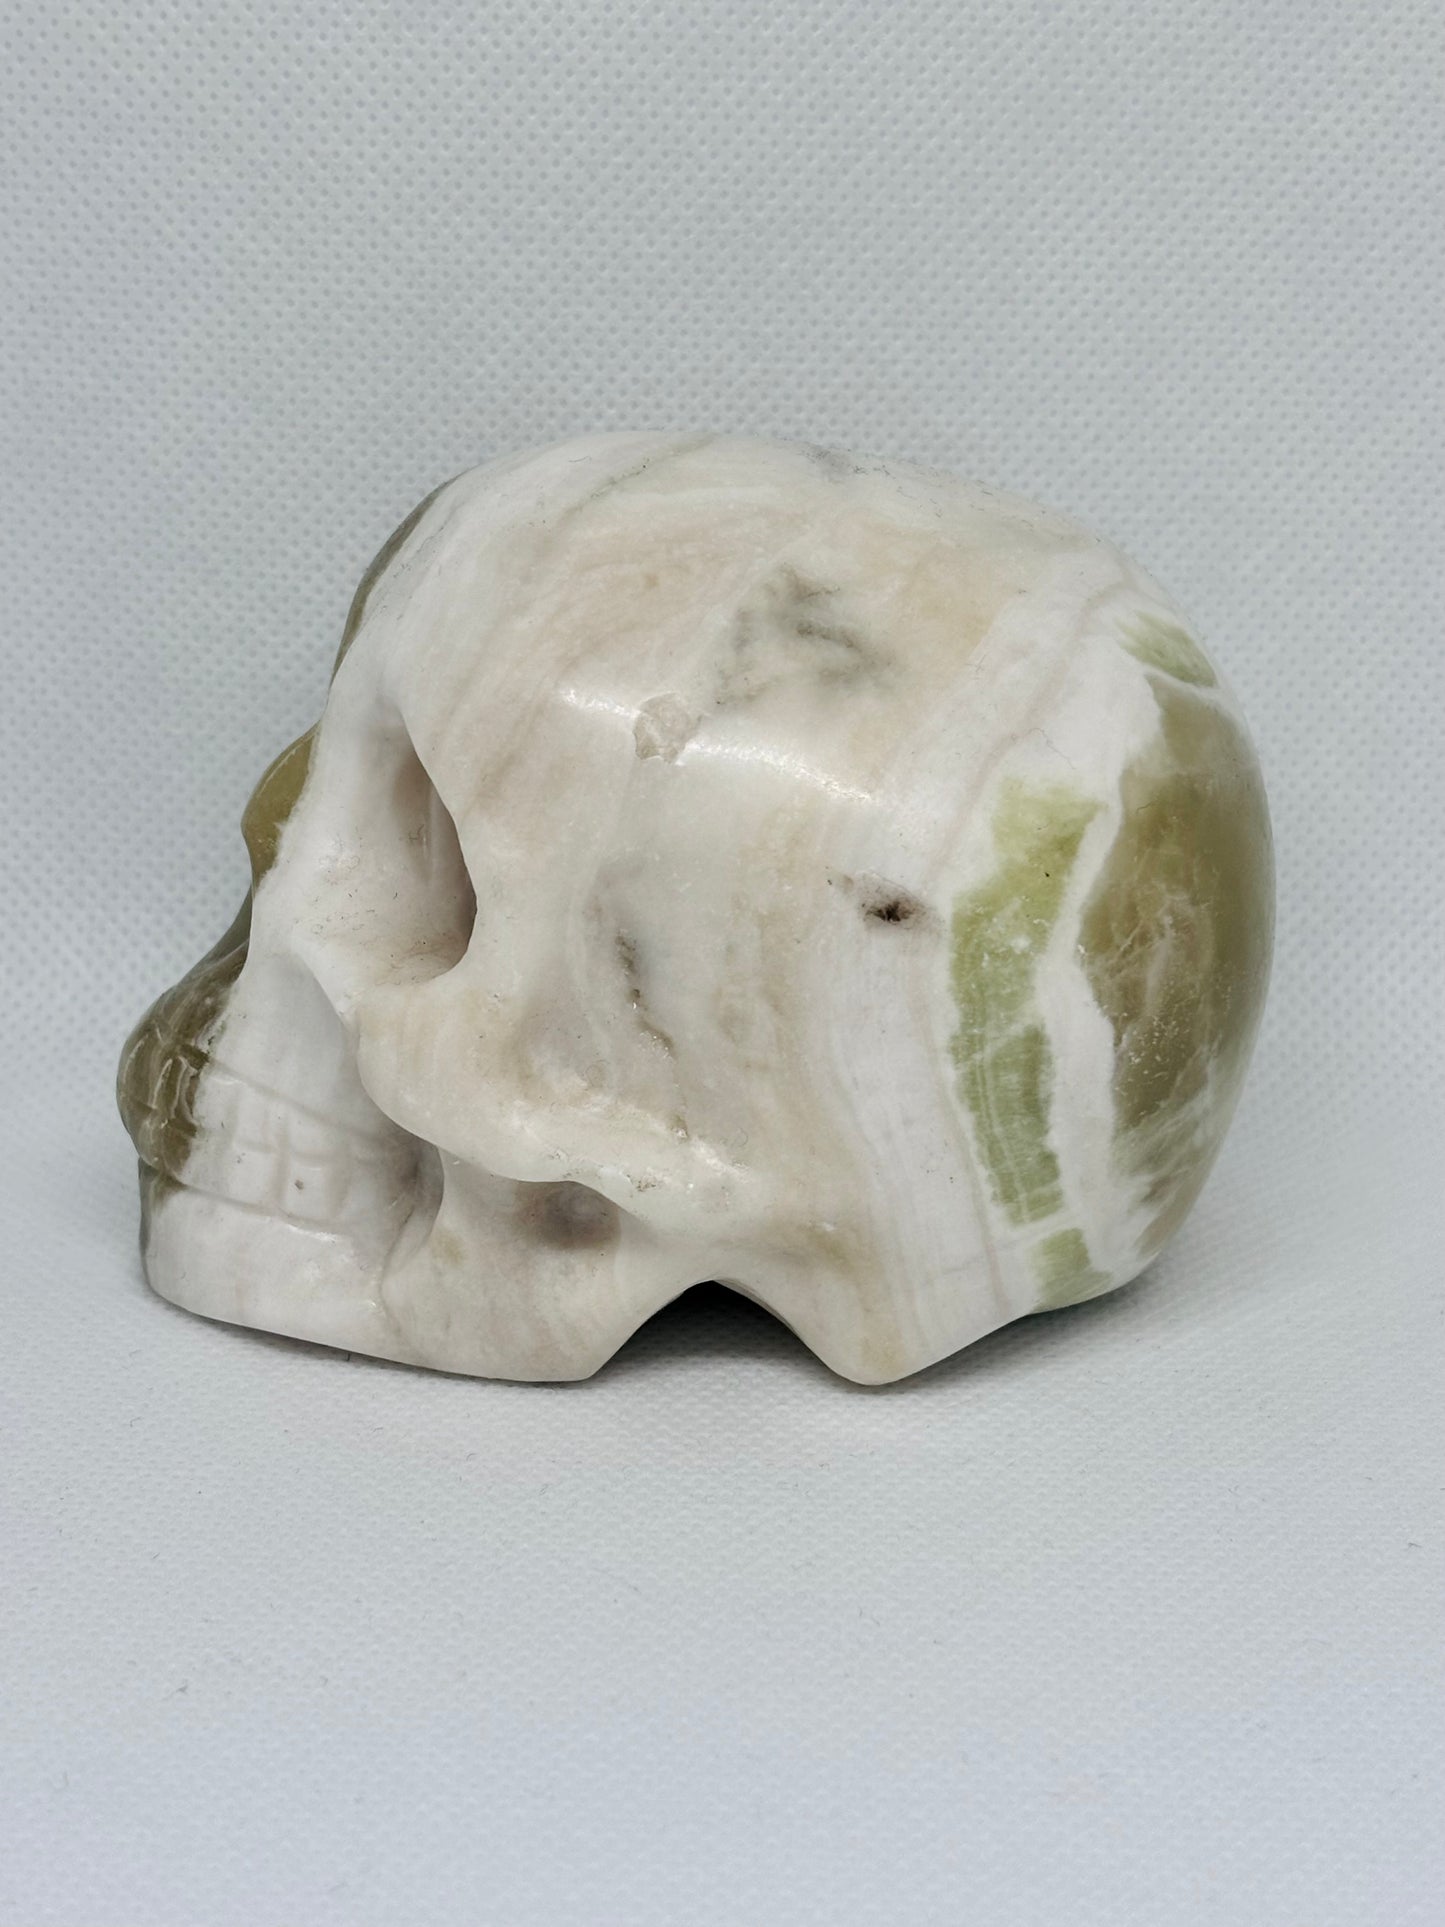 Carved Crystal Skull 1.1lb #GW